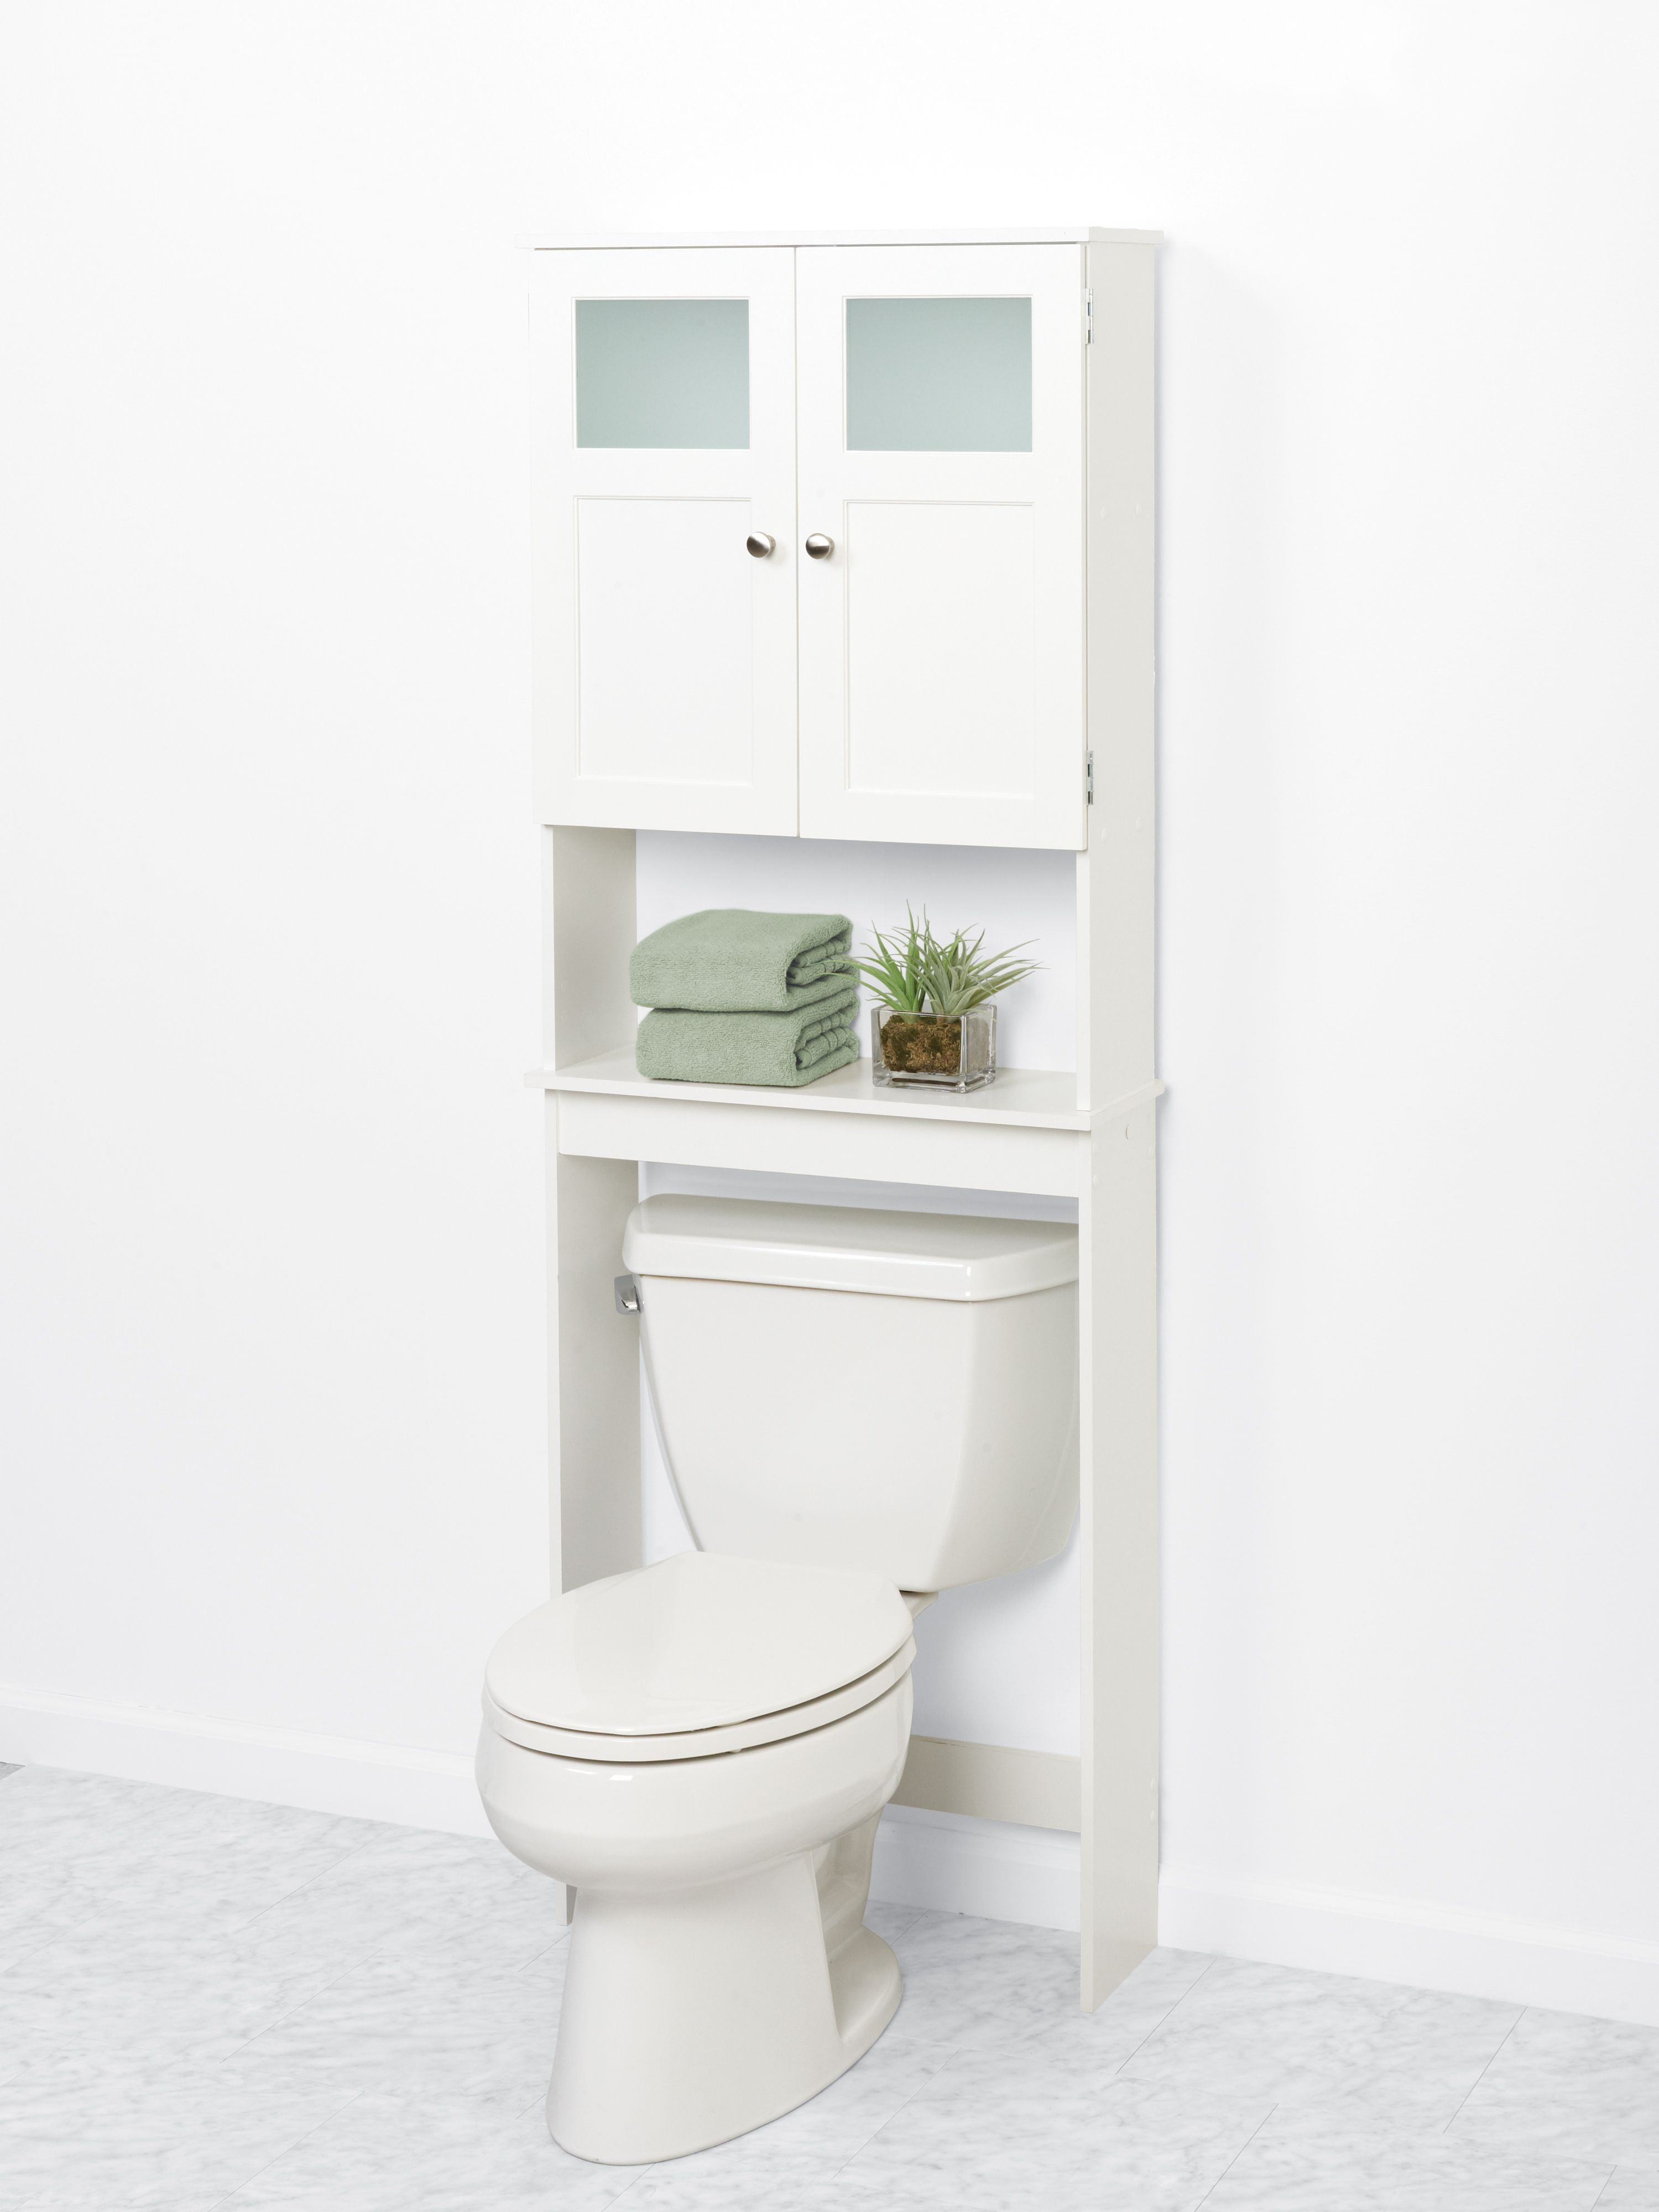 The Toilet Bathroom Storage Spacesaver, Bathroom Vanity With Shelf Over Toilet